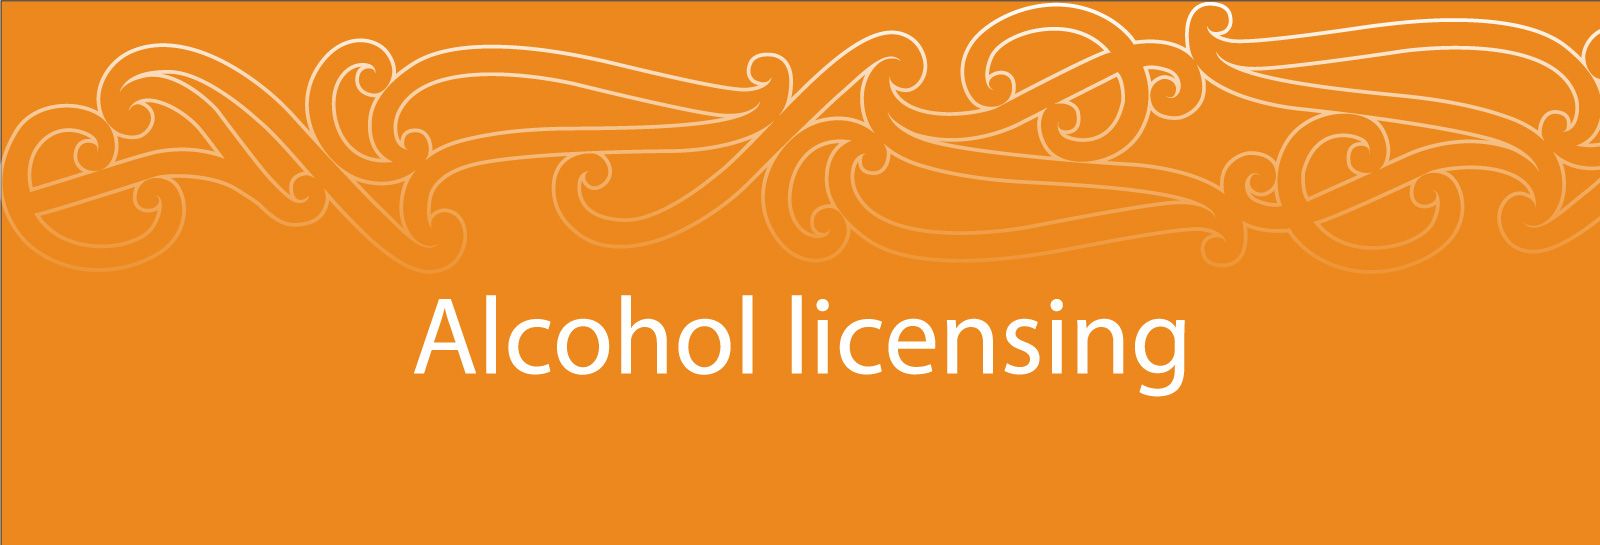 Alcohol licensing banner image